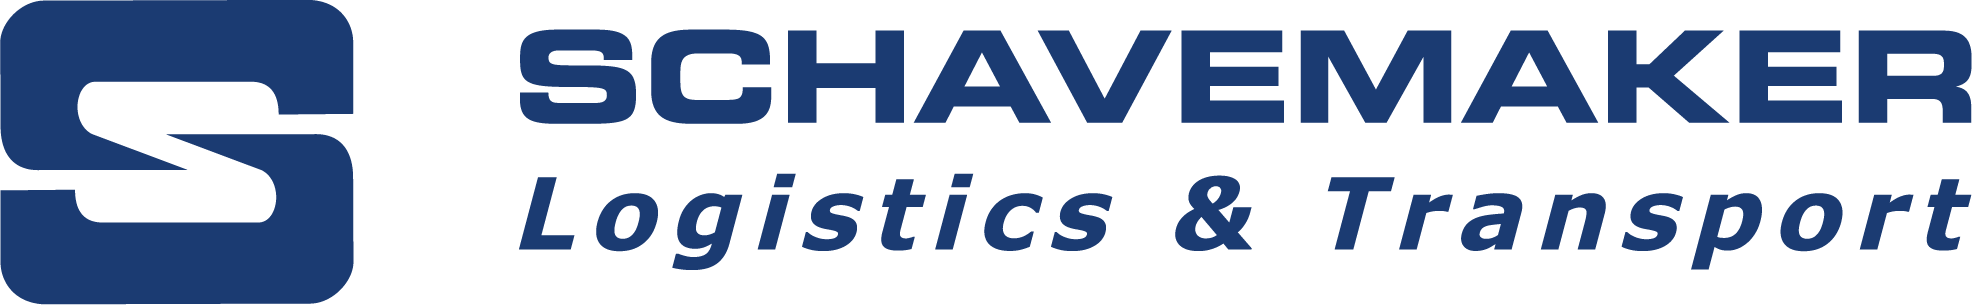 Schavemaker Logistics & Transport  Logo